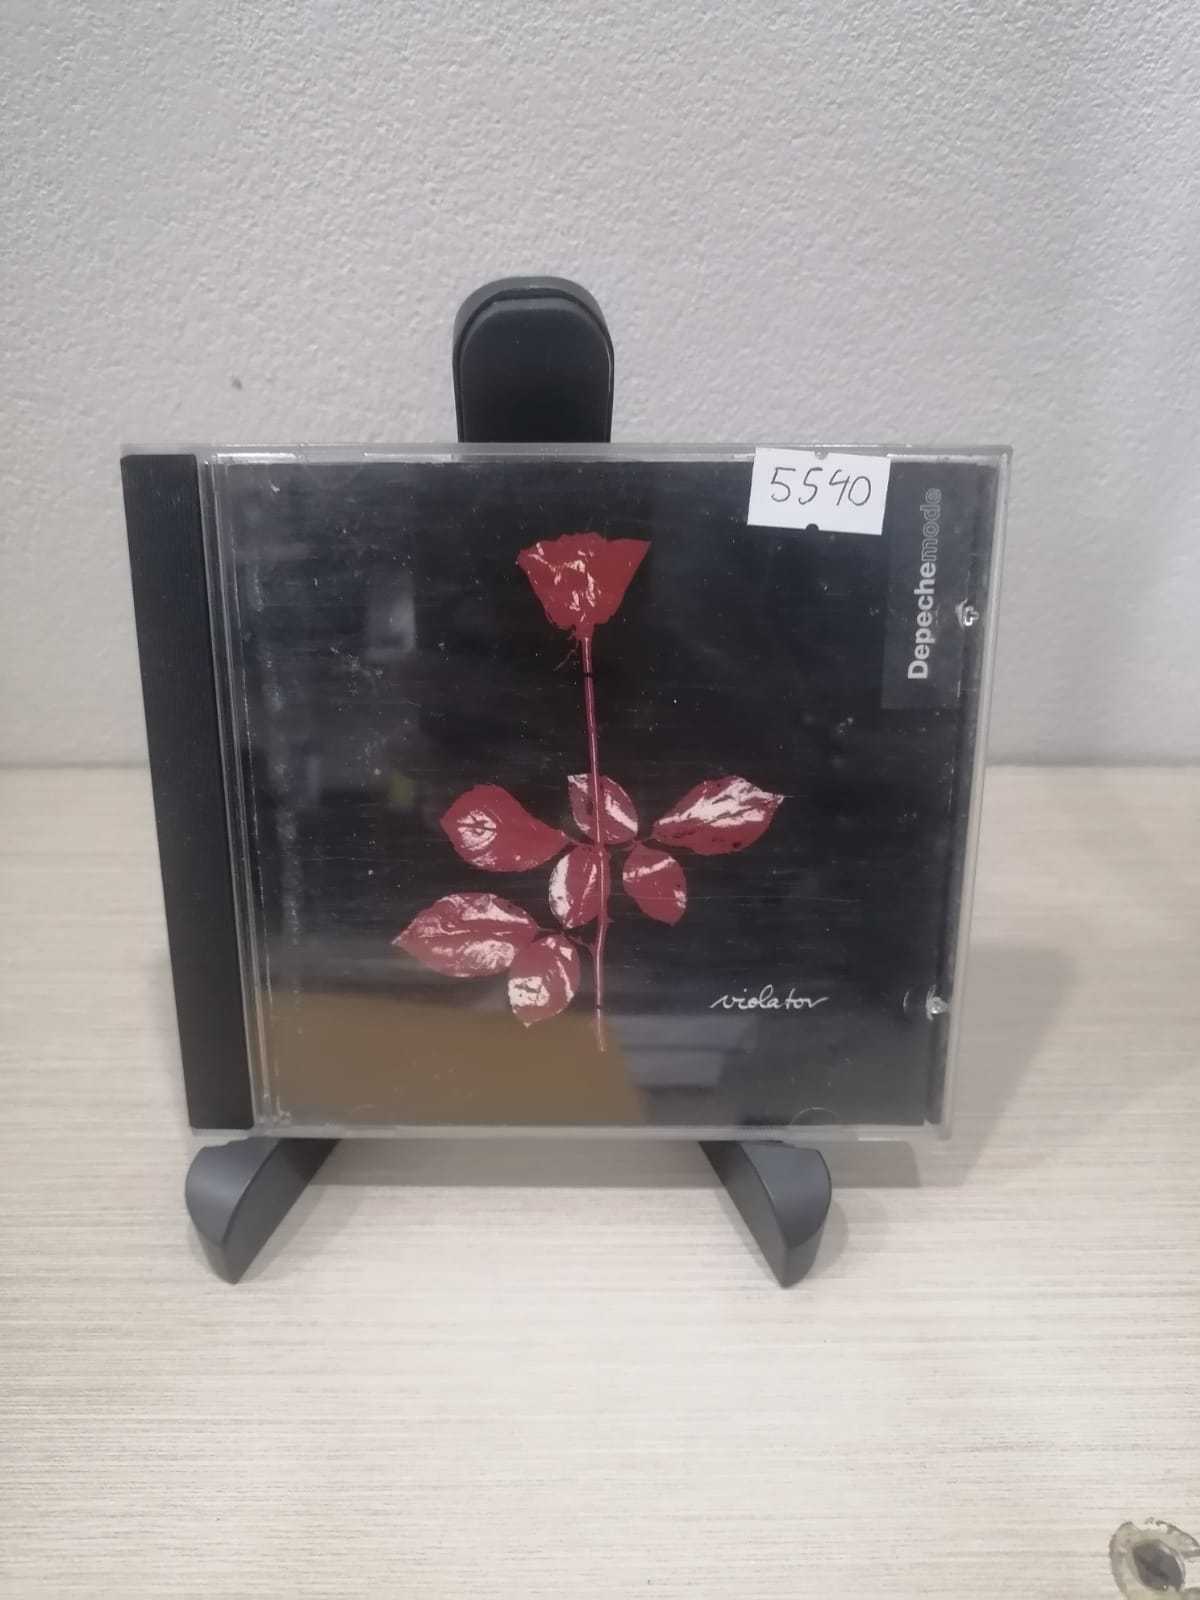 Violator. : Depeche Mode: : CDs y vinilos}